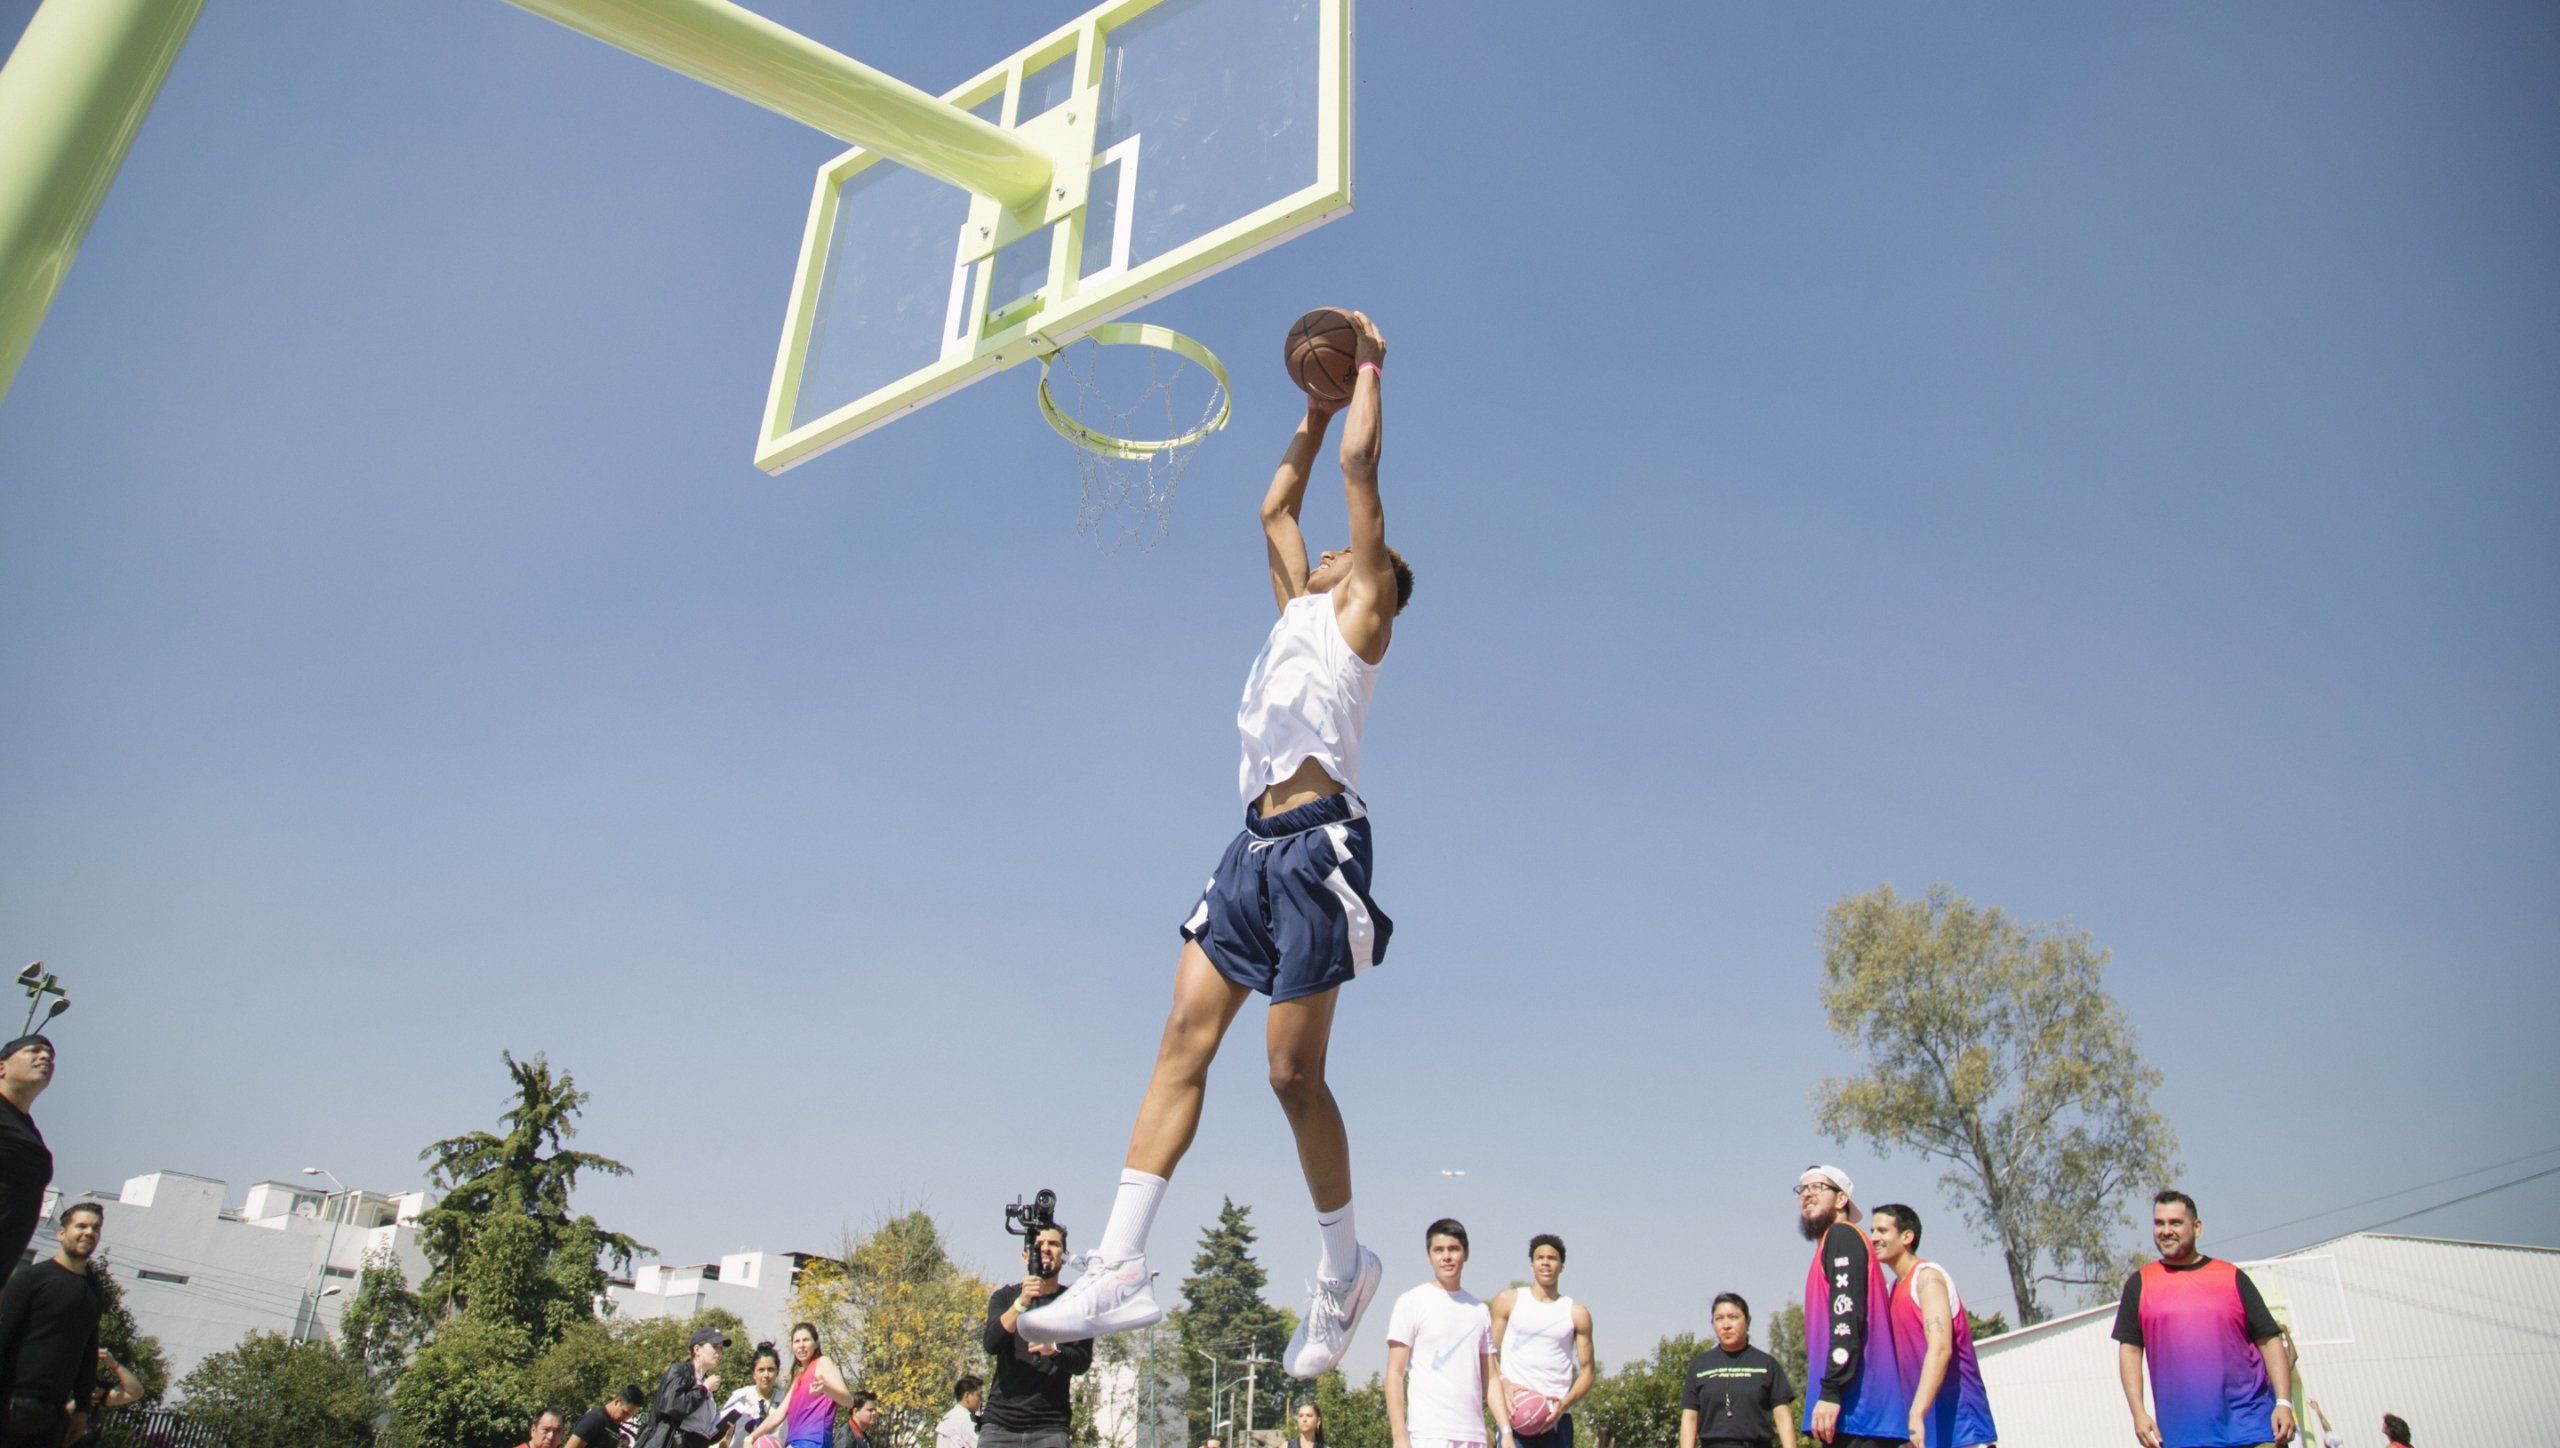 Man slam dunks basketball on outdoor basketball court